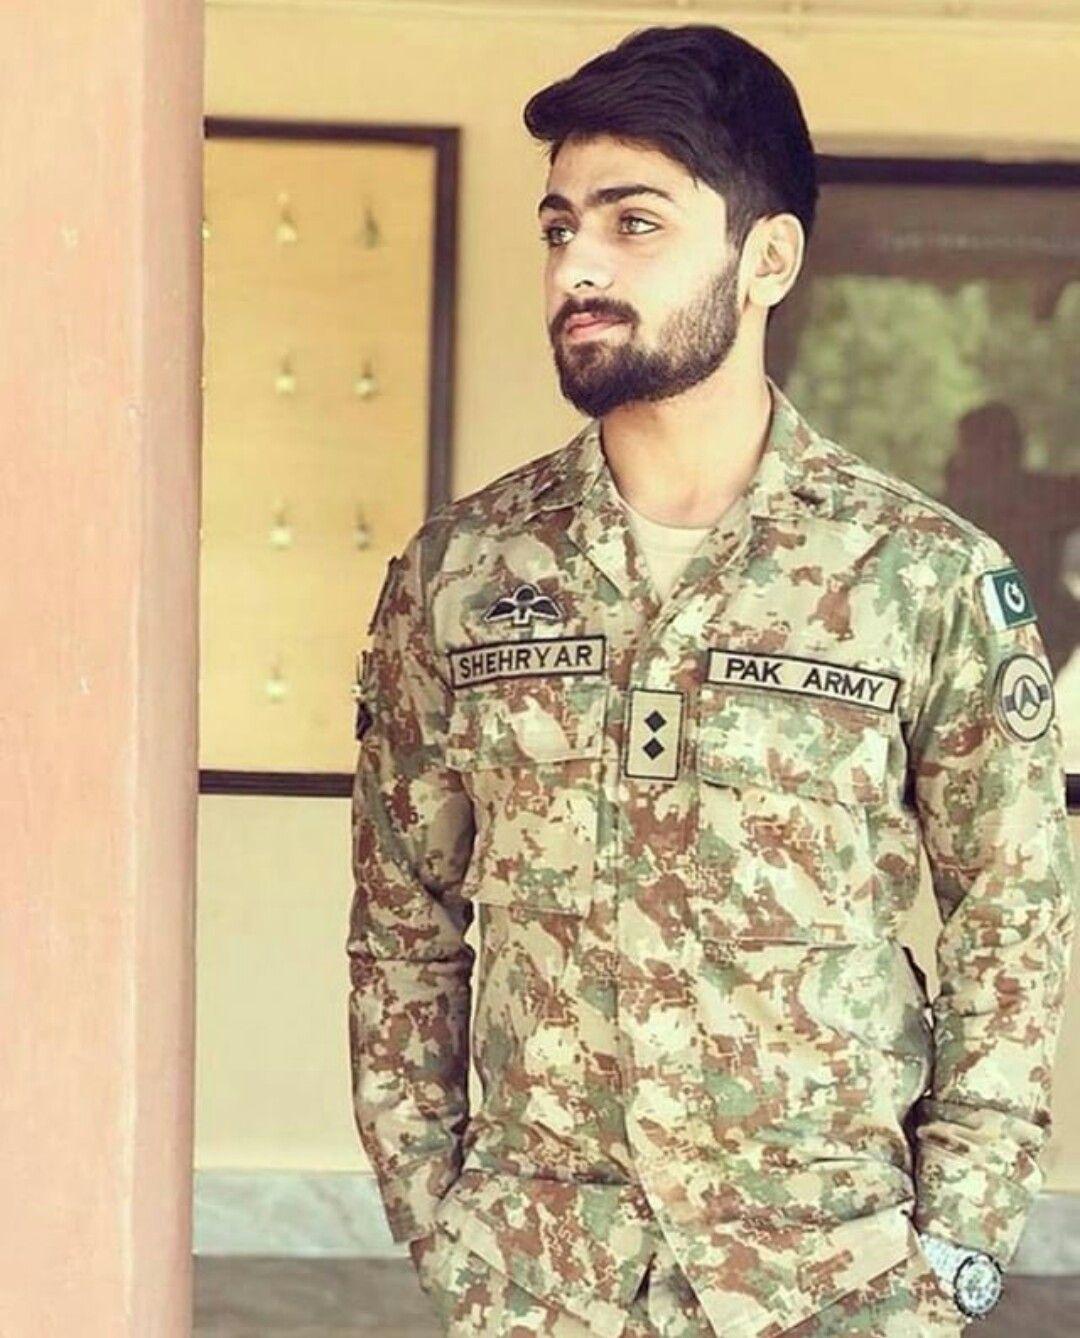 Pak Army Pics. Pakistan Army Interesting Photo. 2019 09 24